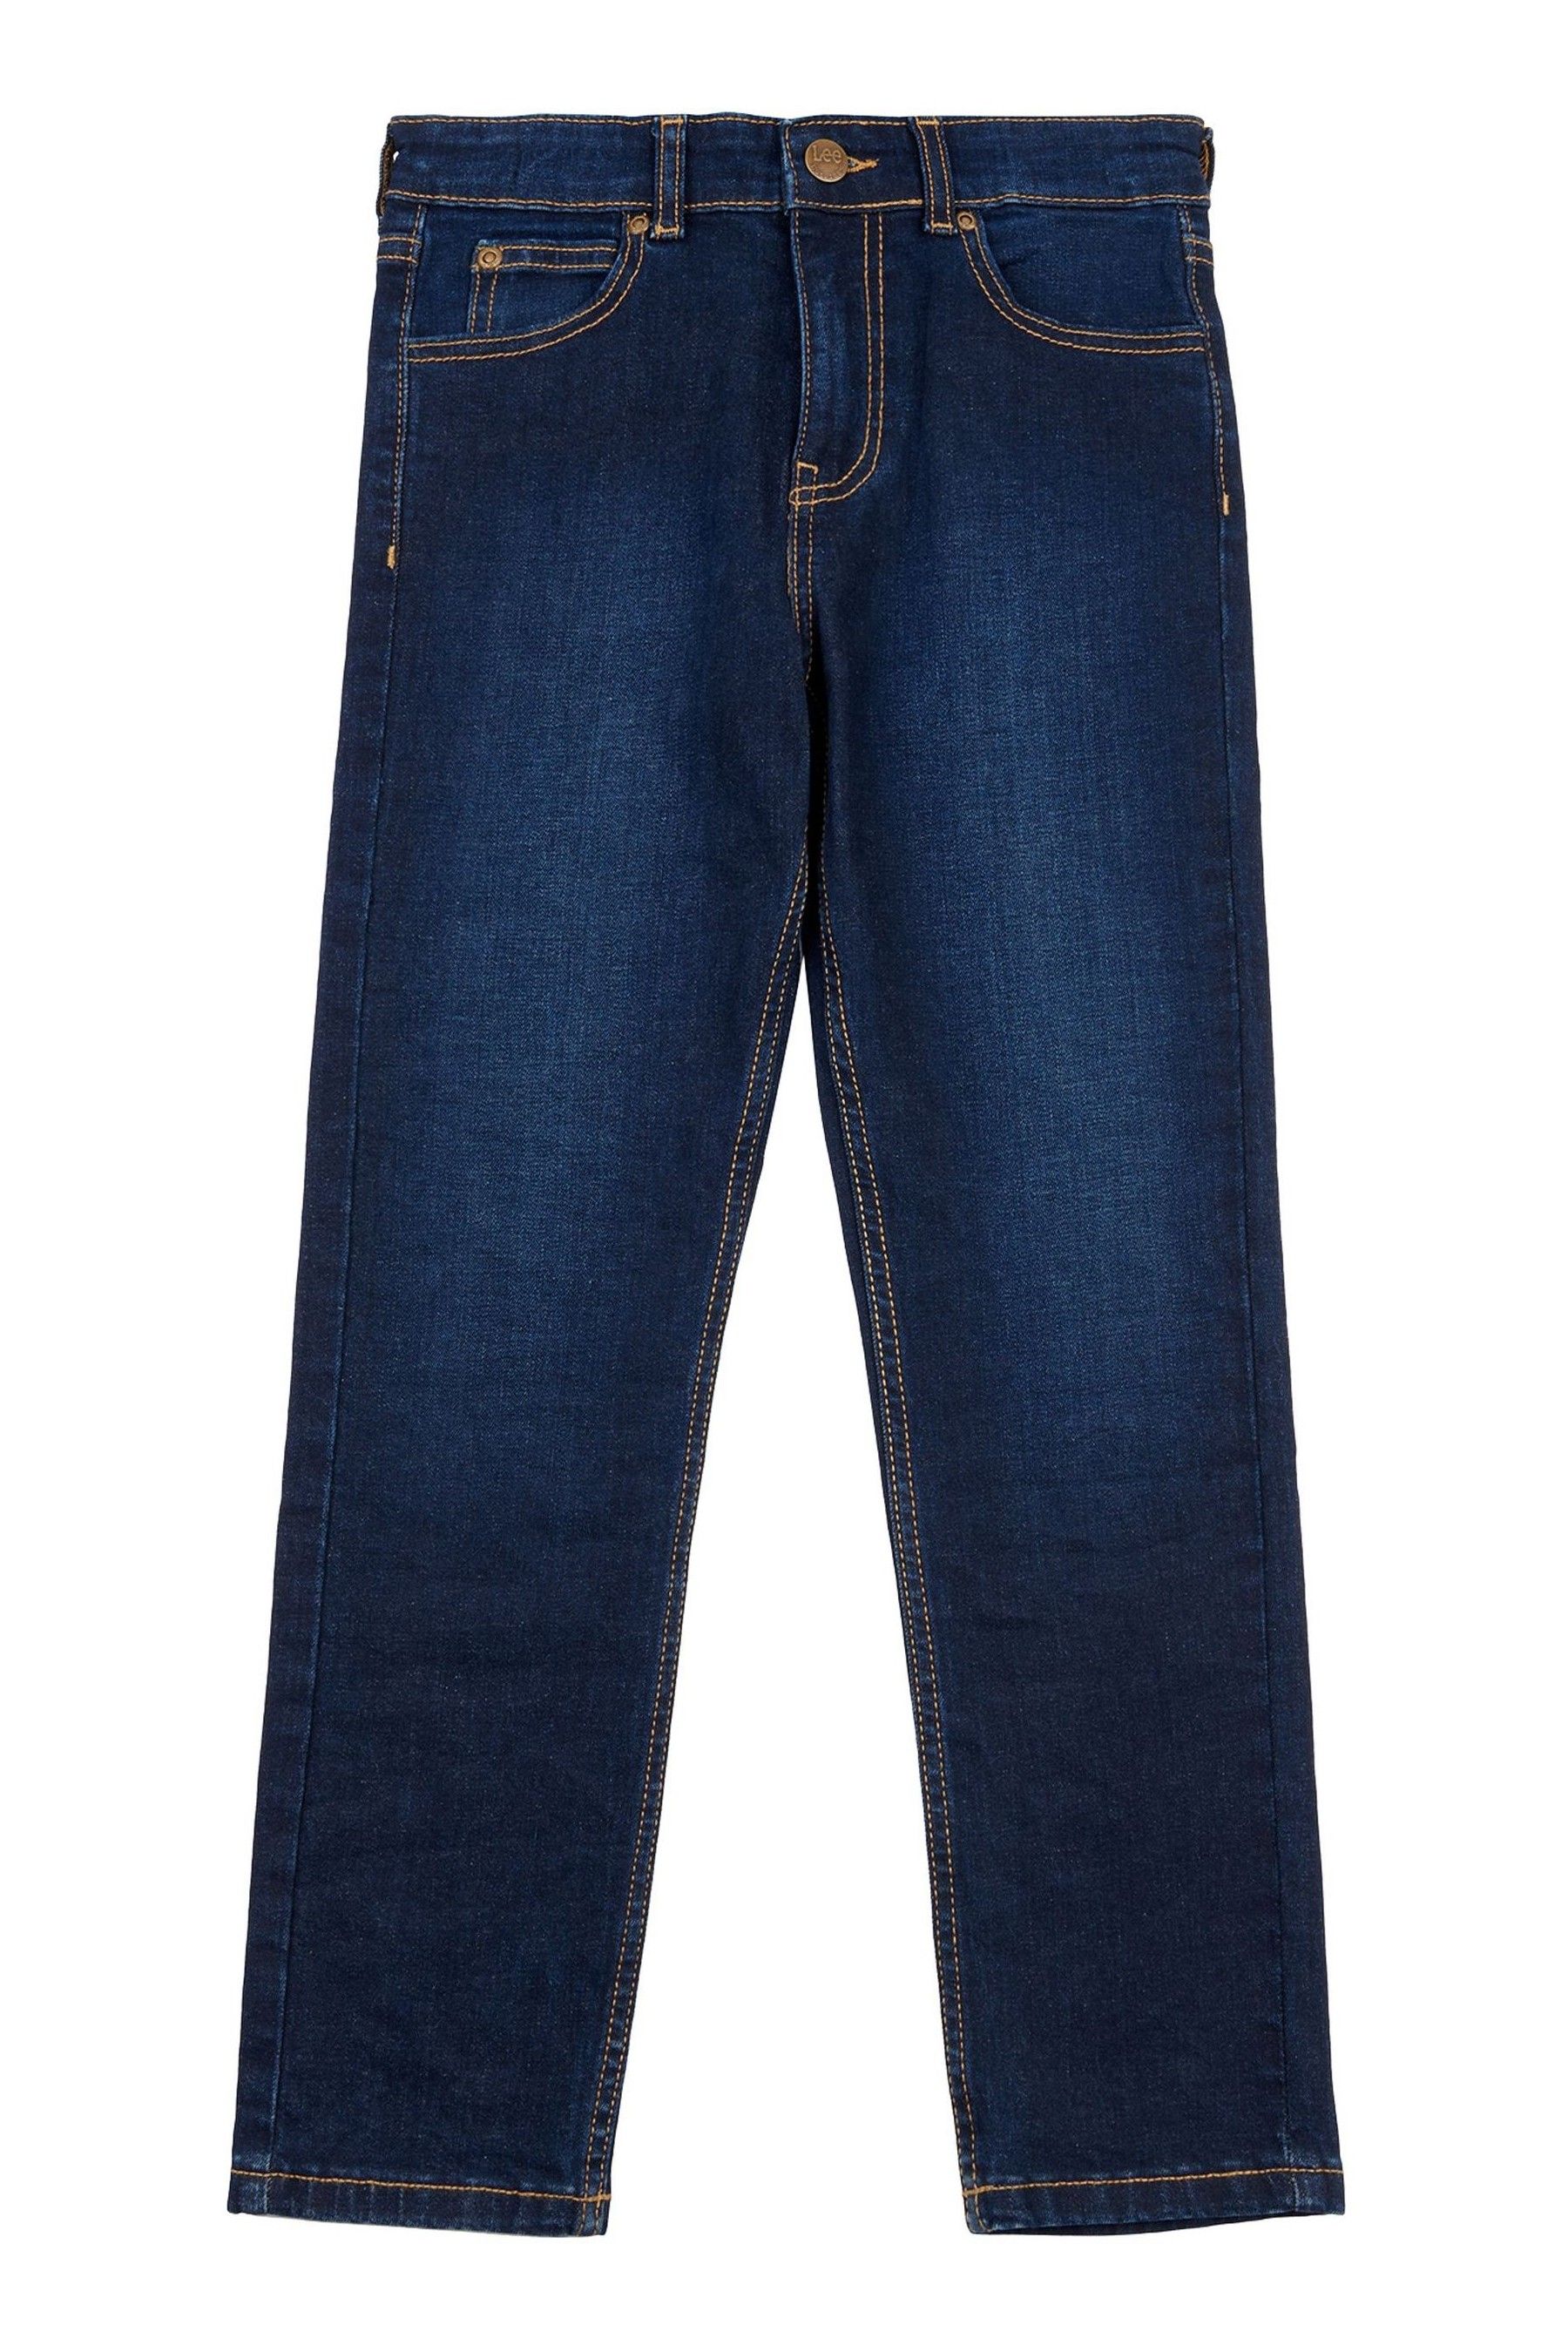 Buy Lee Boys Luke Slim Fit Jeans from the Next UK online shop